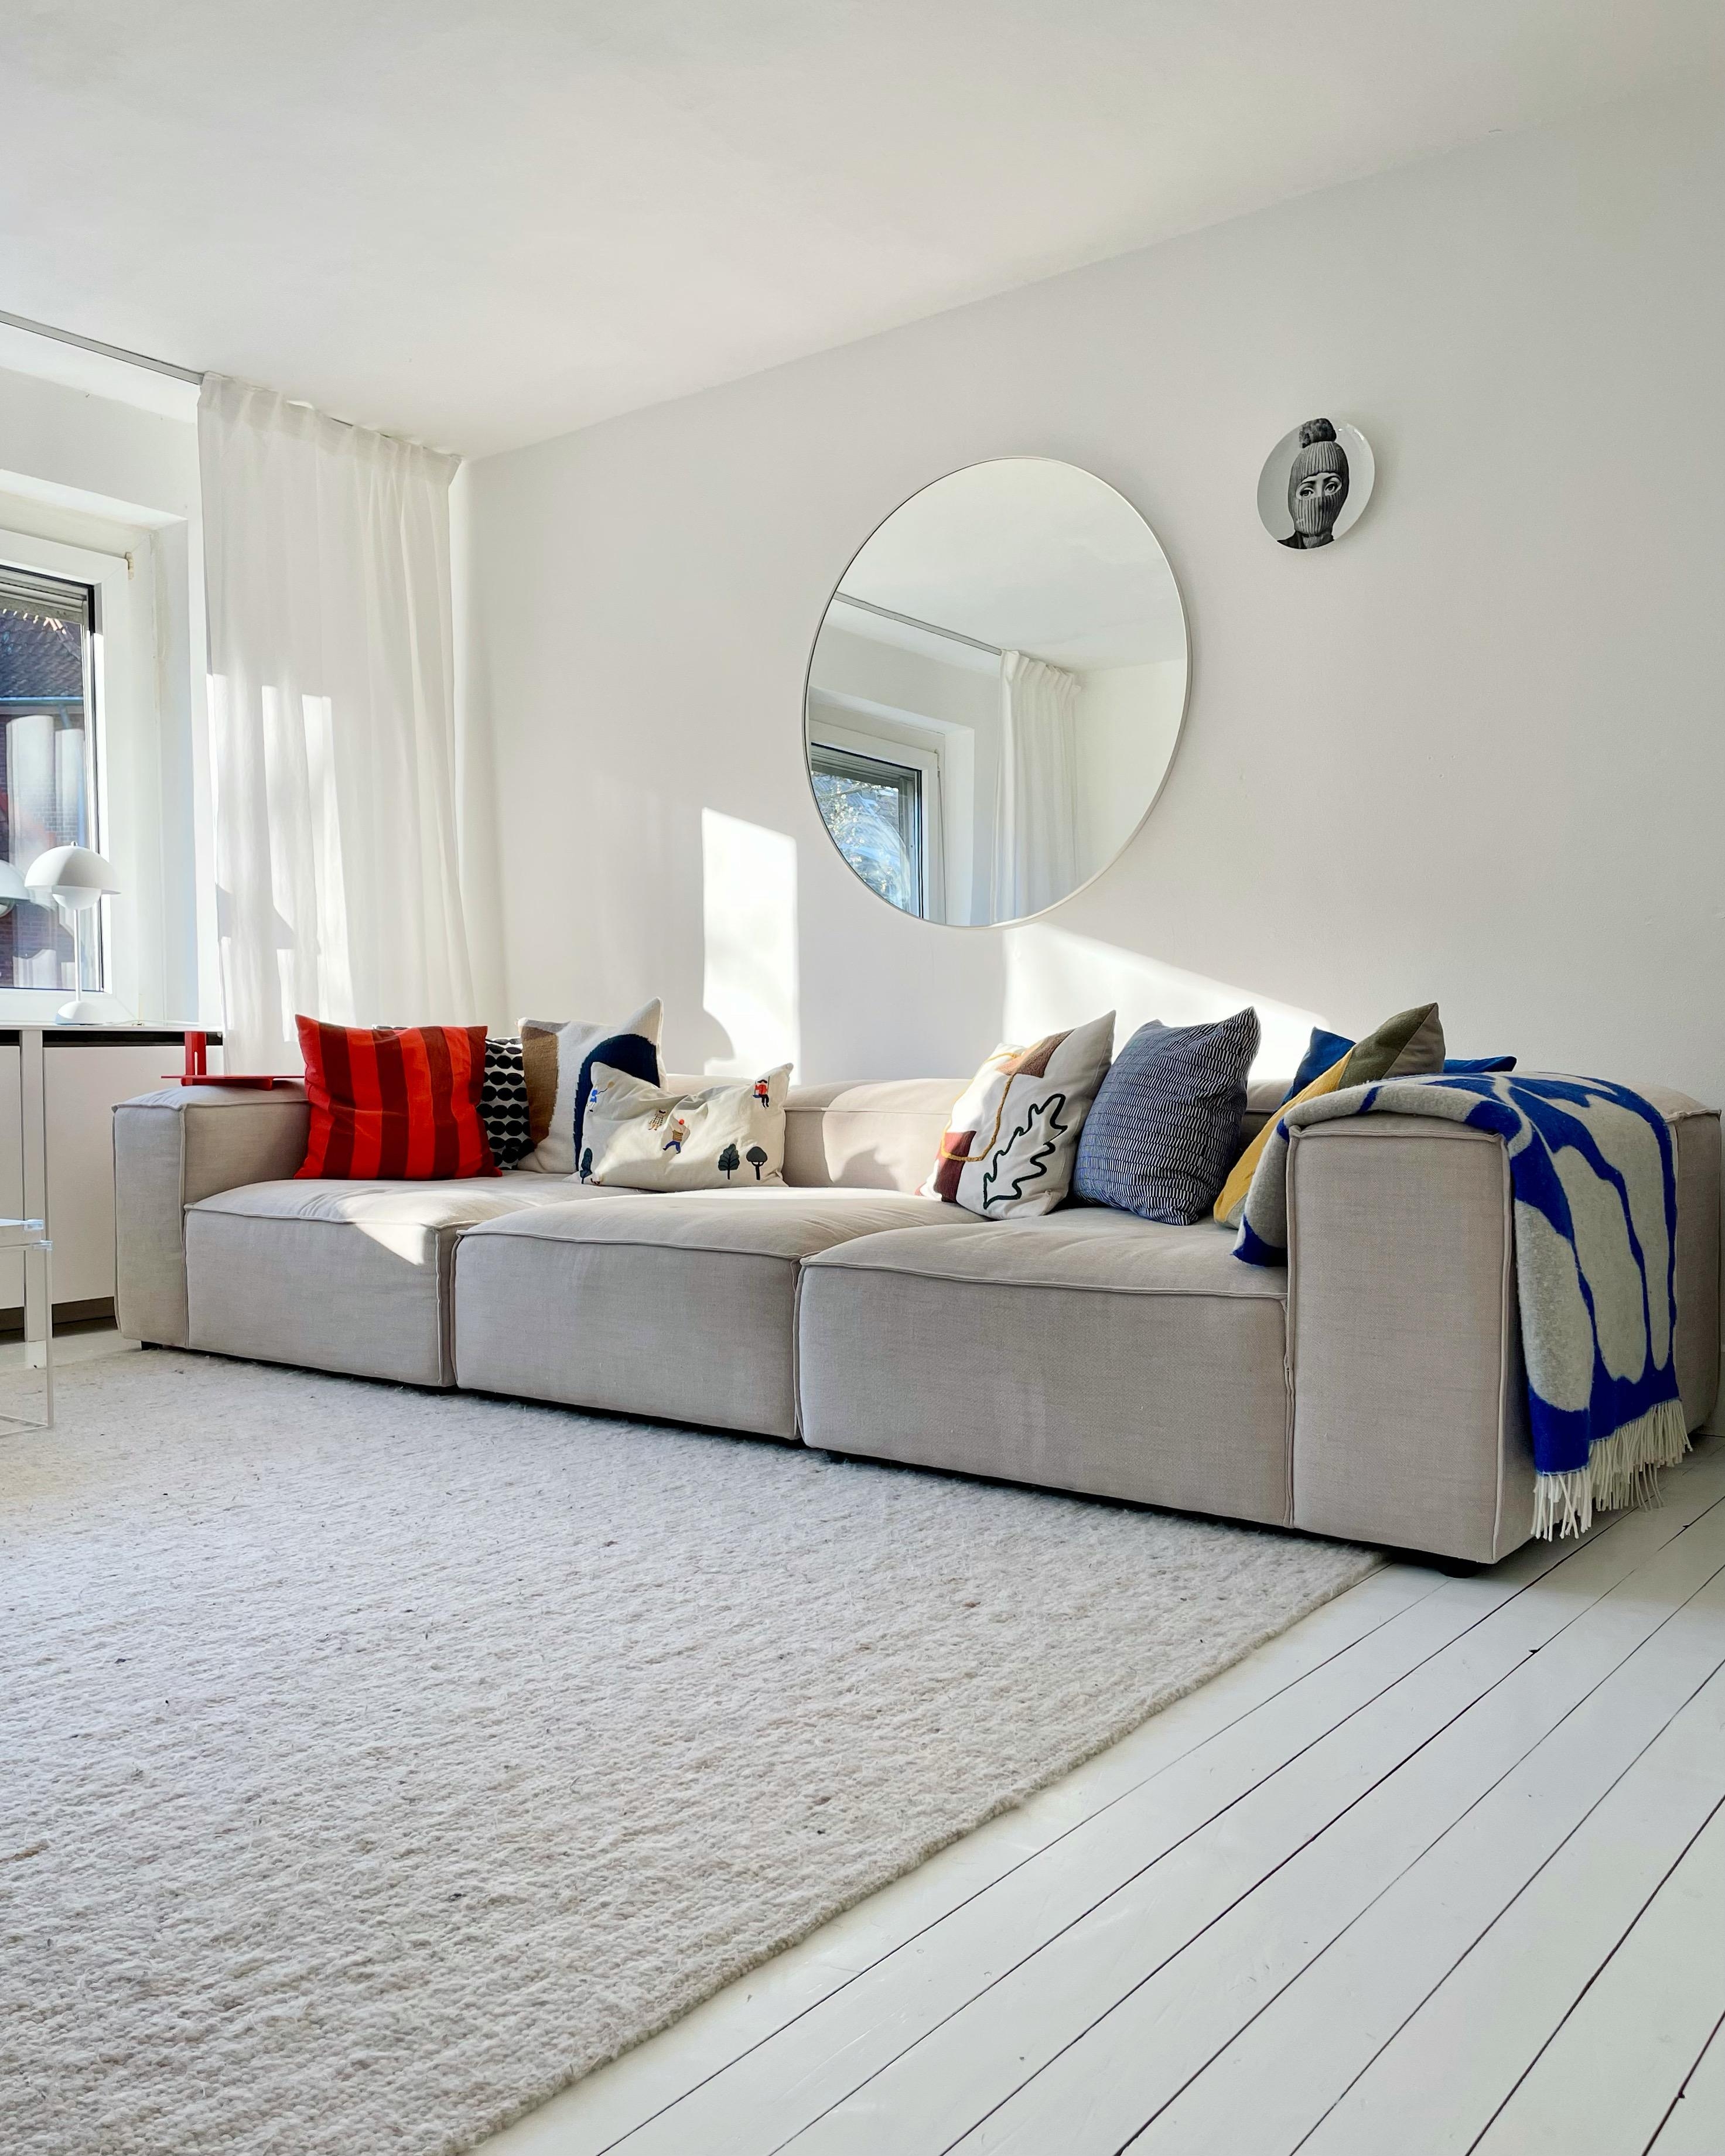 MOIN MOIN. 
#wohnzimmer #couchstyle